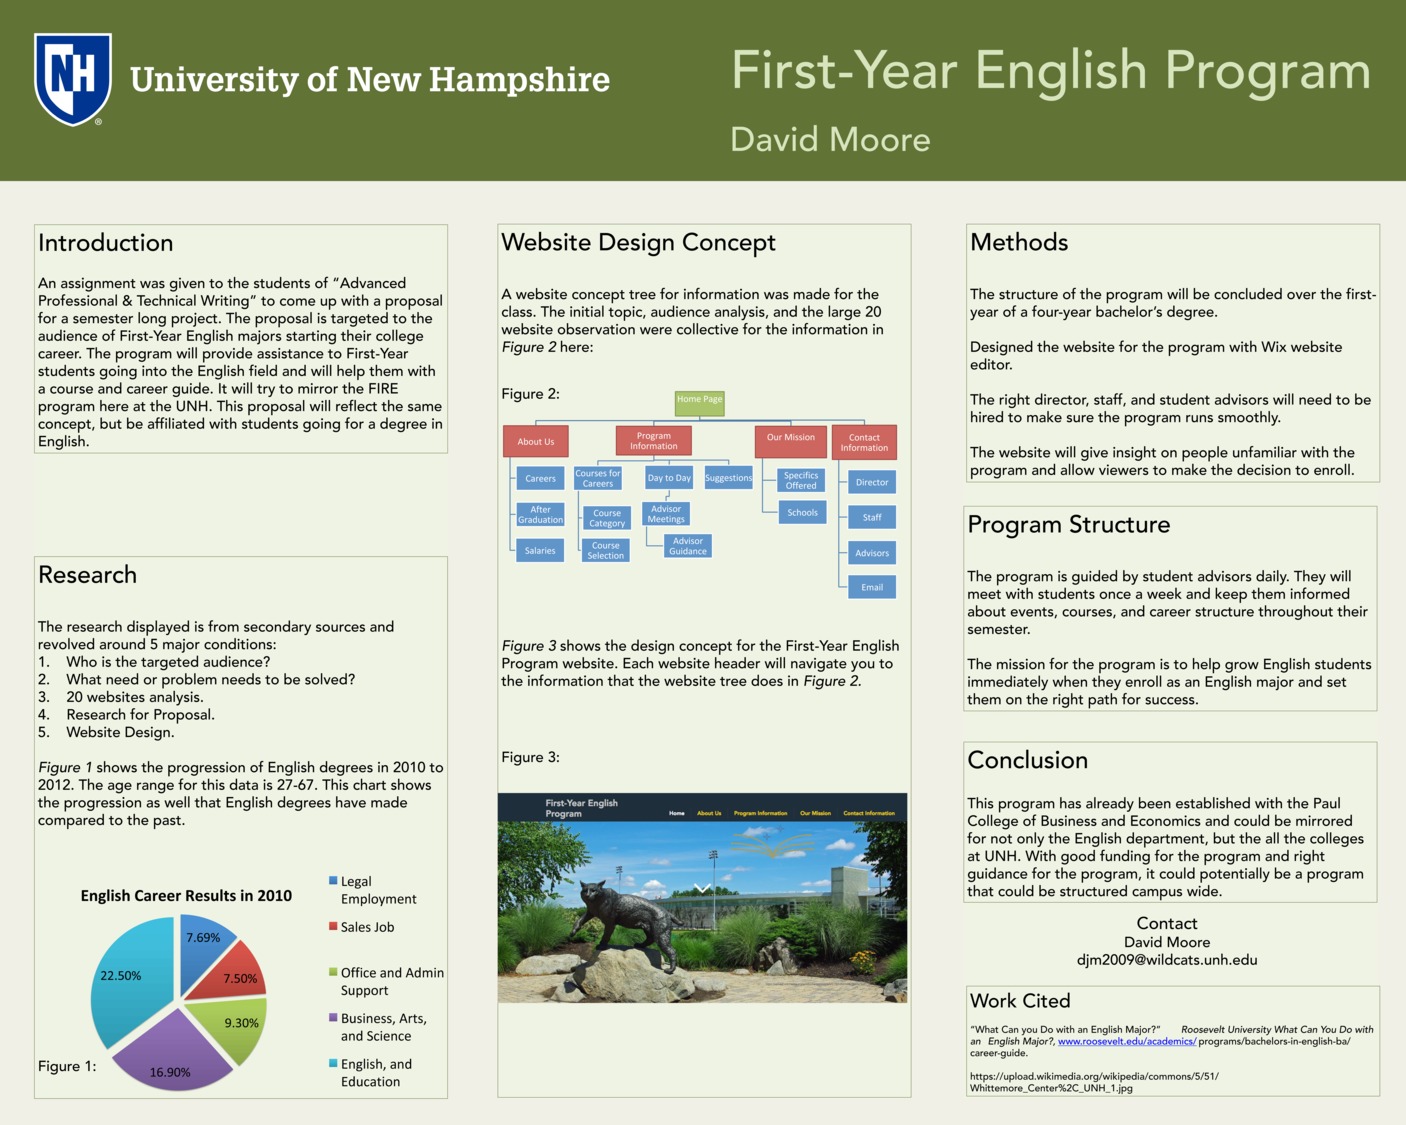 First-Year English Program by djm2009